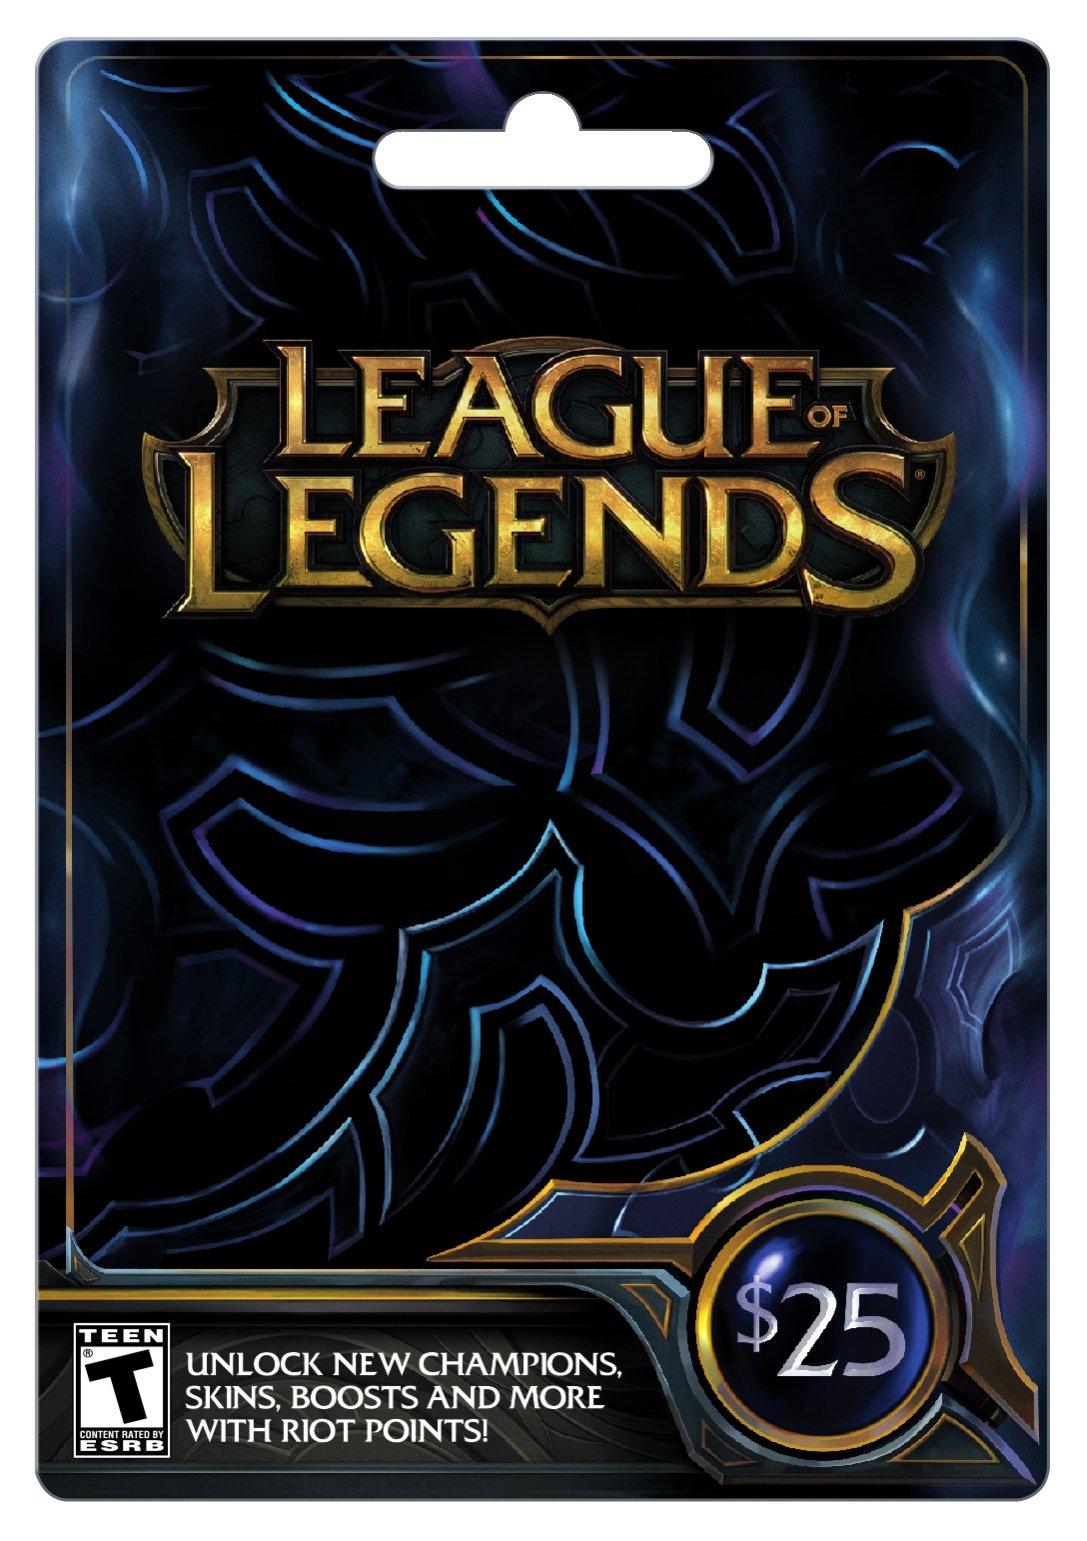 League Of Legends 25 Game Card Gamestop - $25 roblox gift card gamestop lol doll